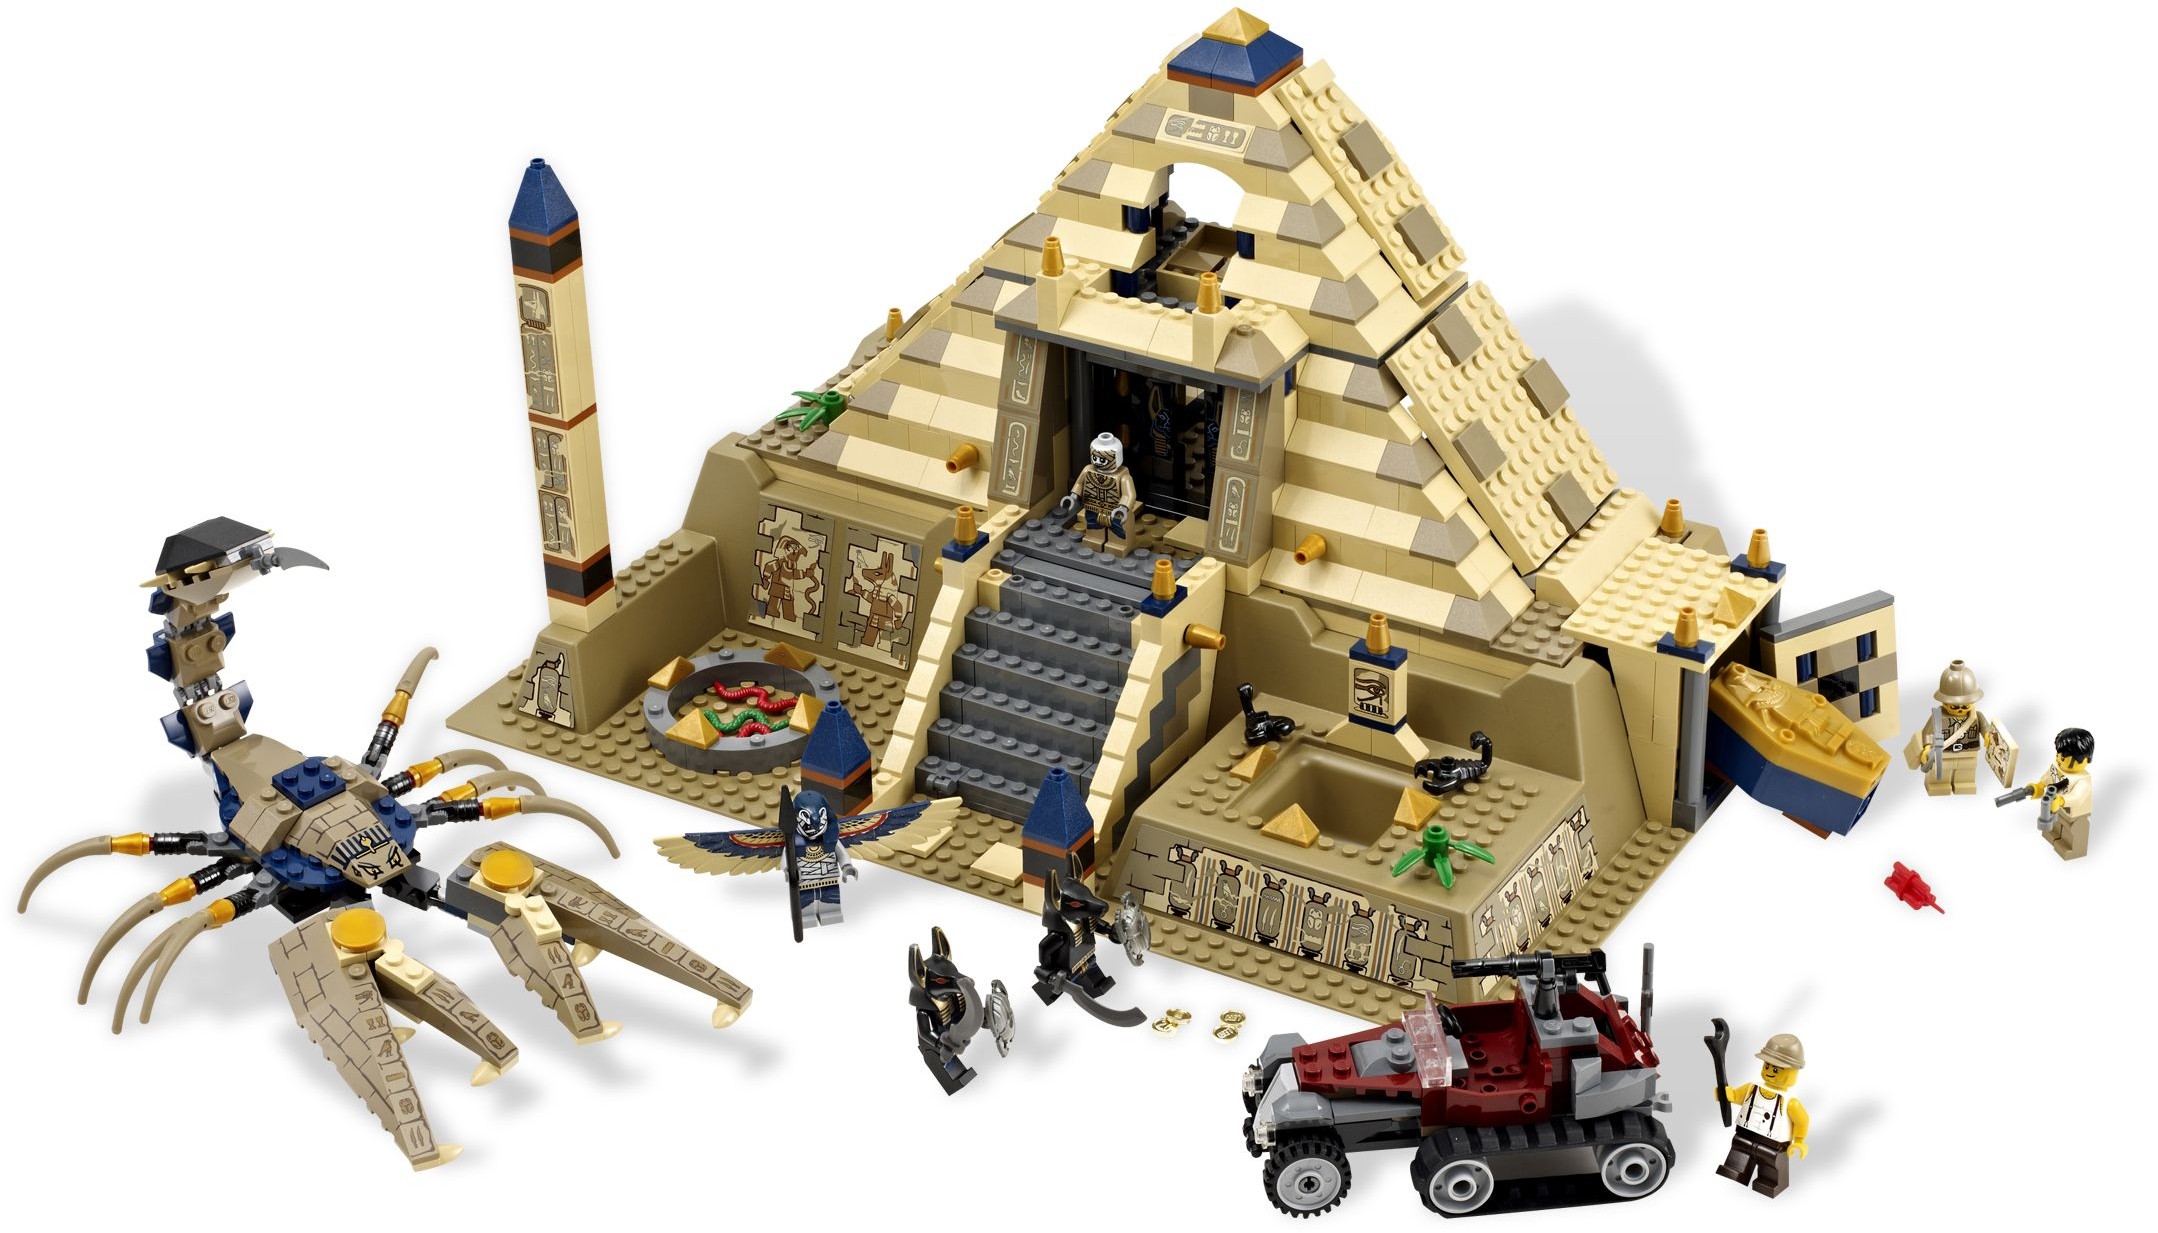 LEGO Pharaoh's Quest Brickset